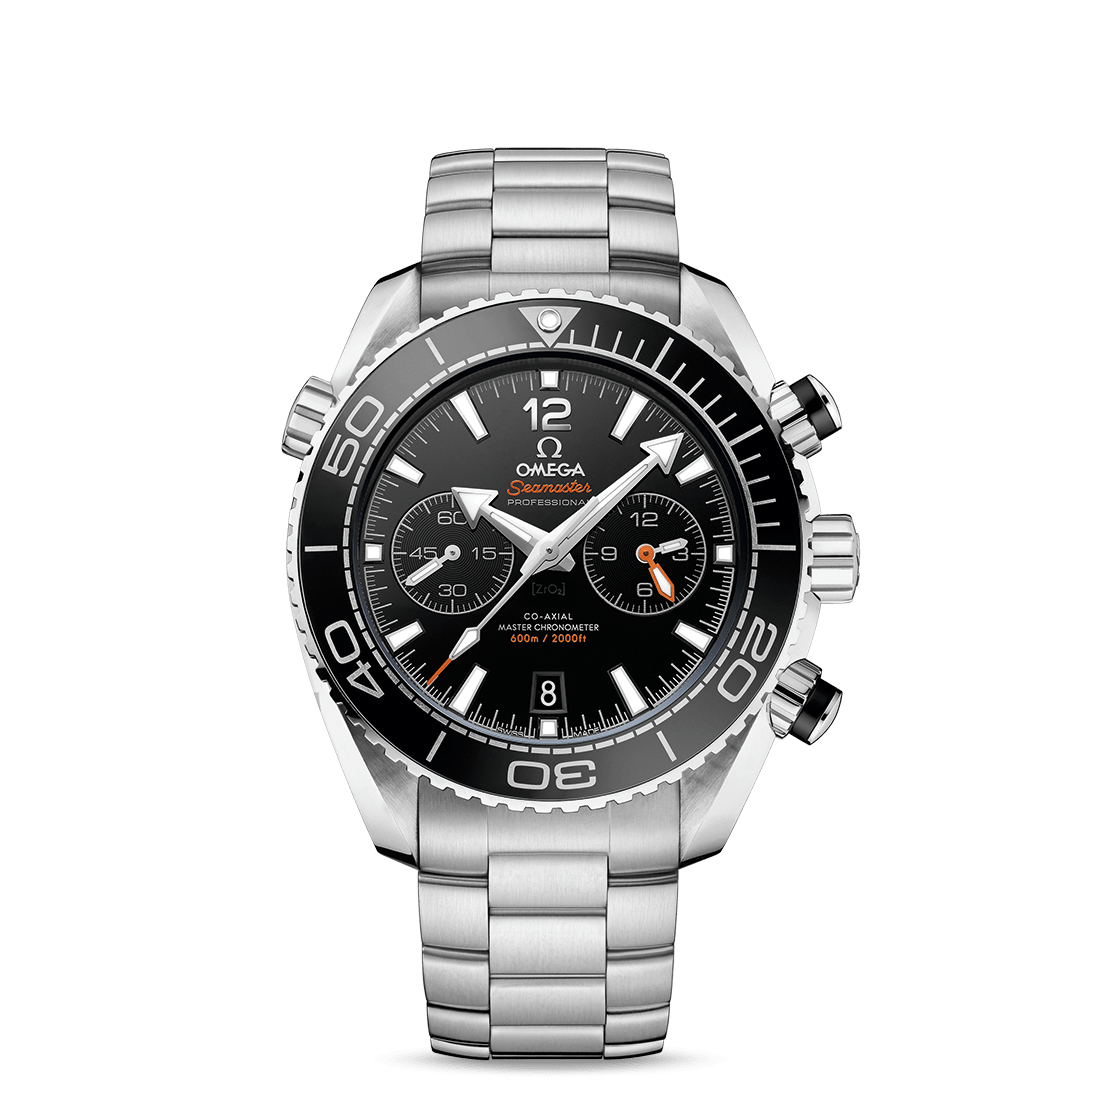 OMEGA Seamaster Planet Ocean Master Chronometer Chronograph 45mm, model #215.30.46.51.01.001, at IJL Since 1937